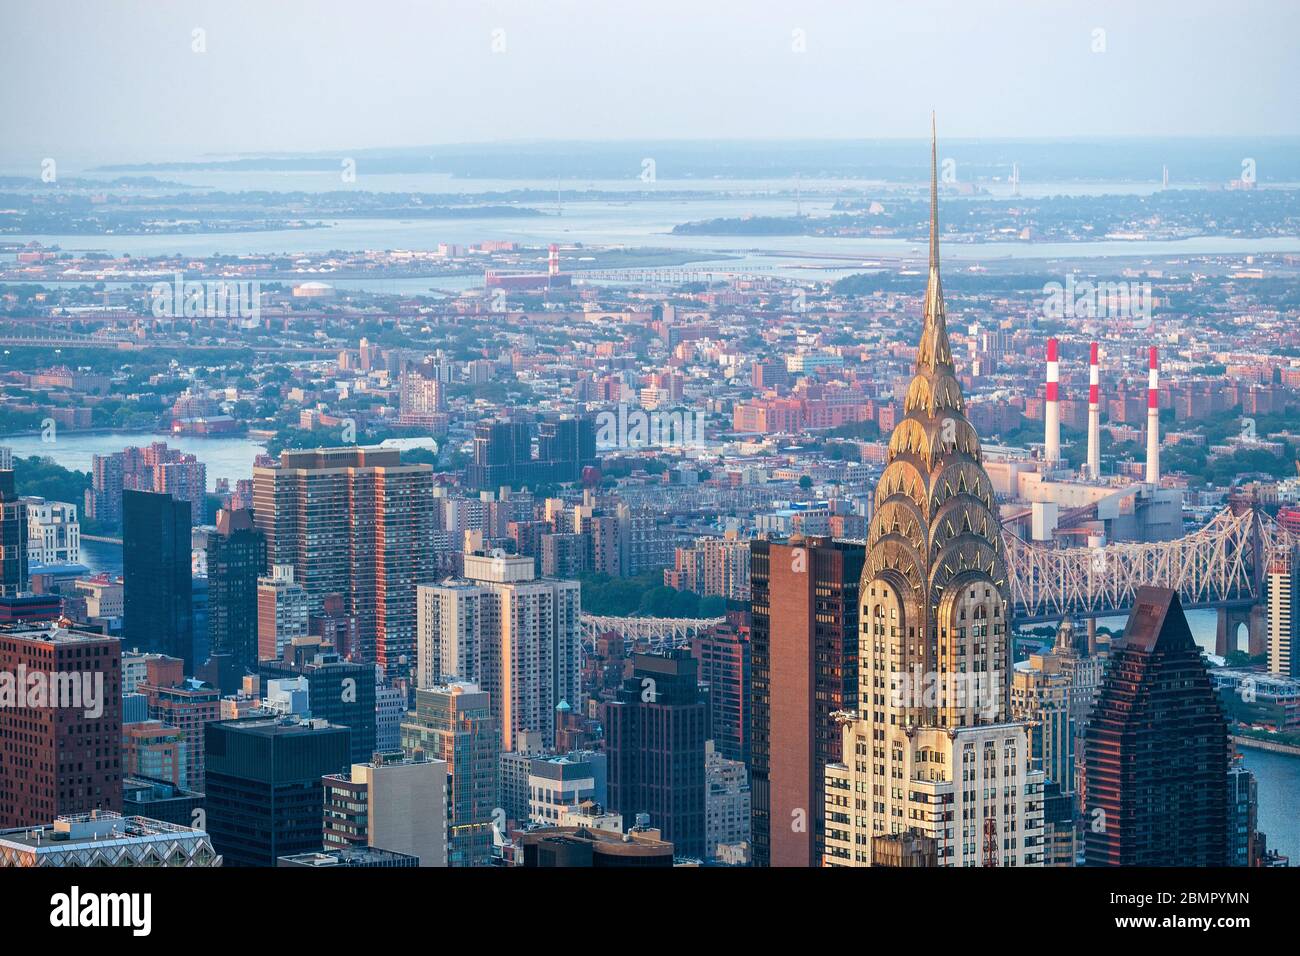 New York City skyline including architectural landmark Chrysler Building in Manhattan, New York, United States of America. Stock Photo